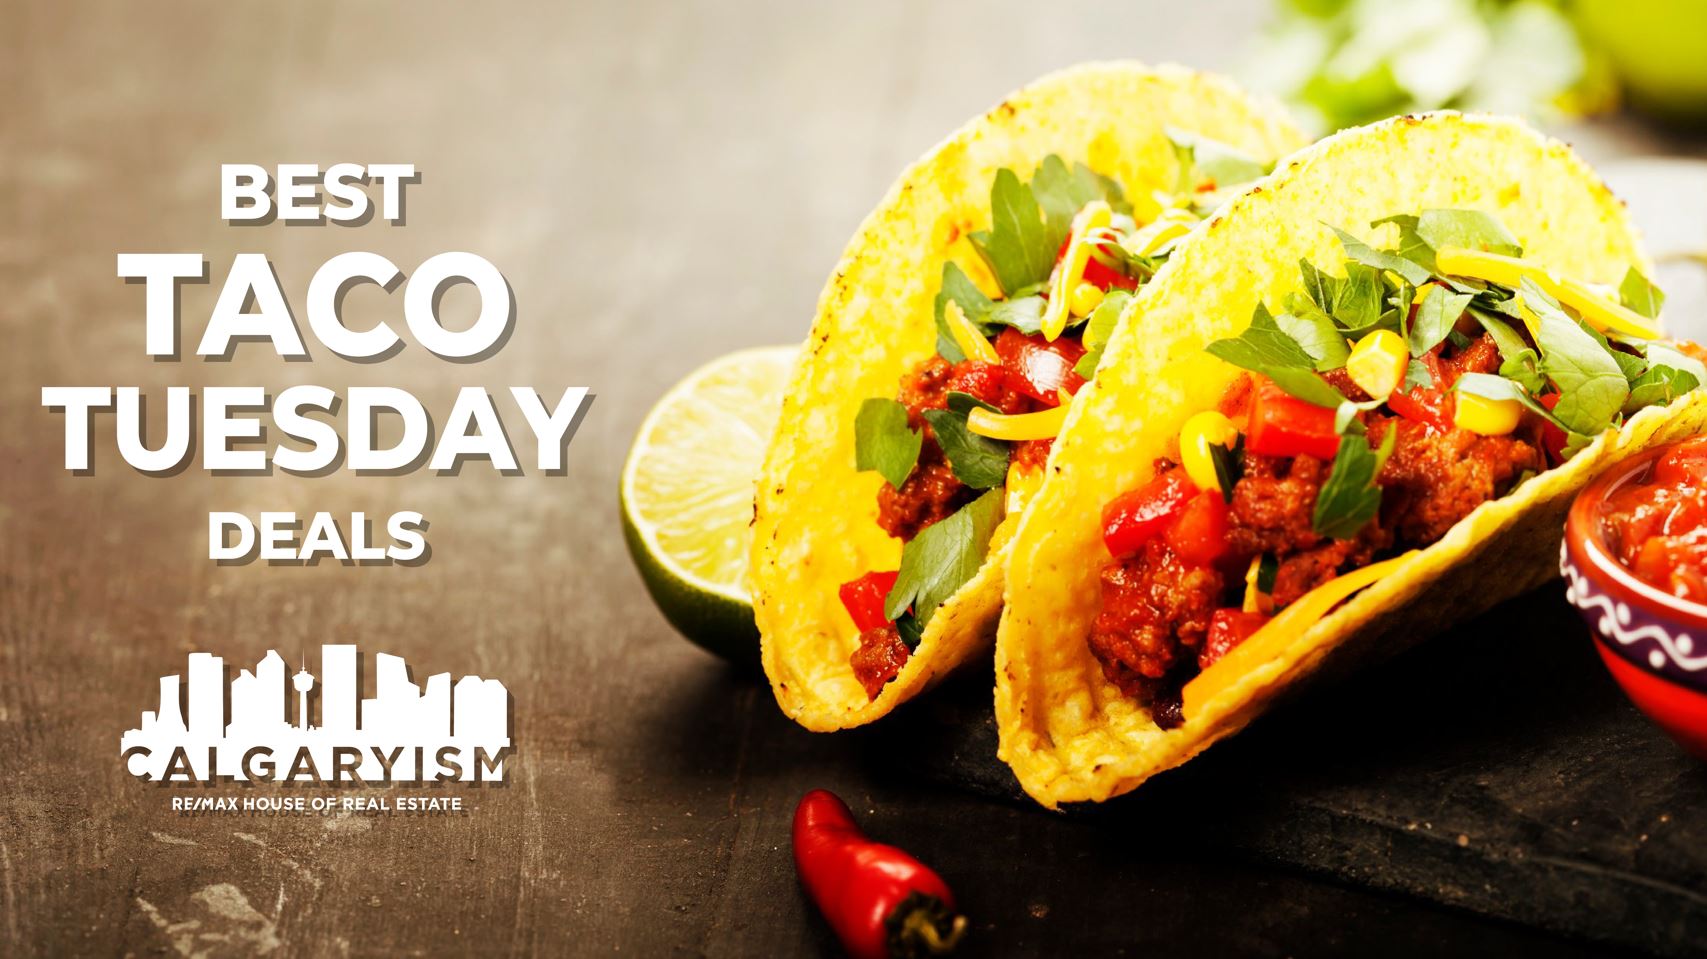 CALGARY Taco Tuesday Deals